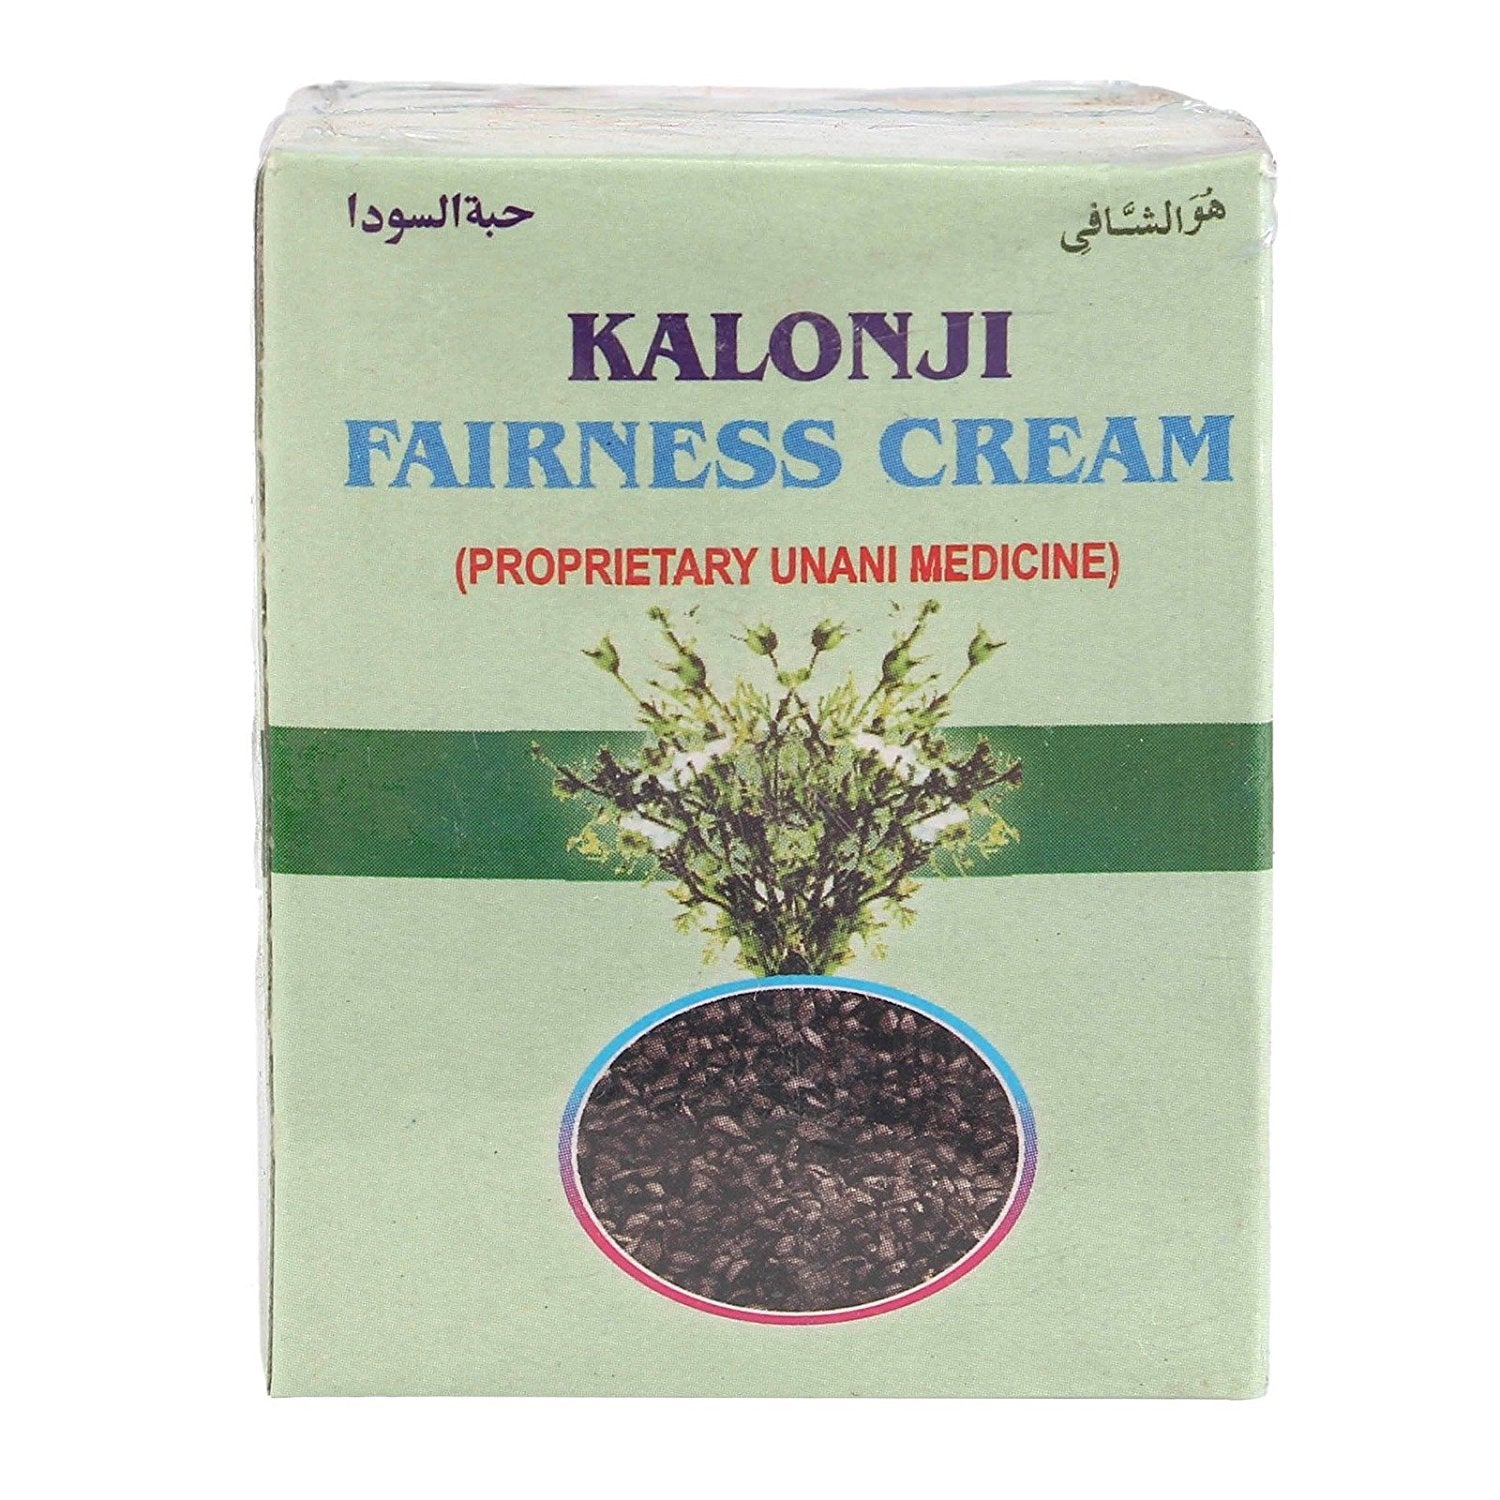 Kalonji Fairness Cream